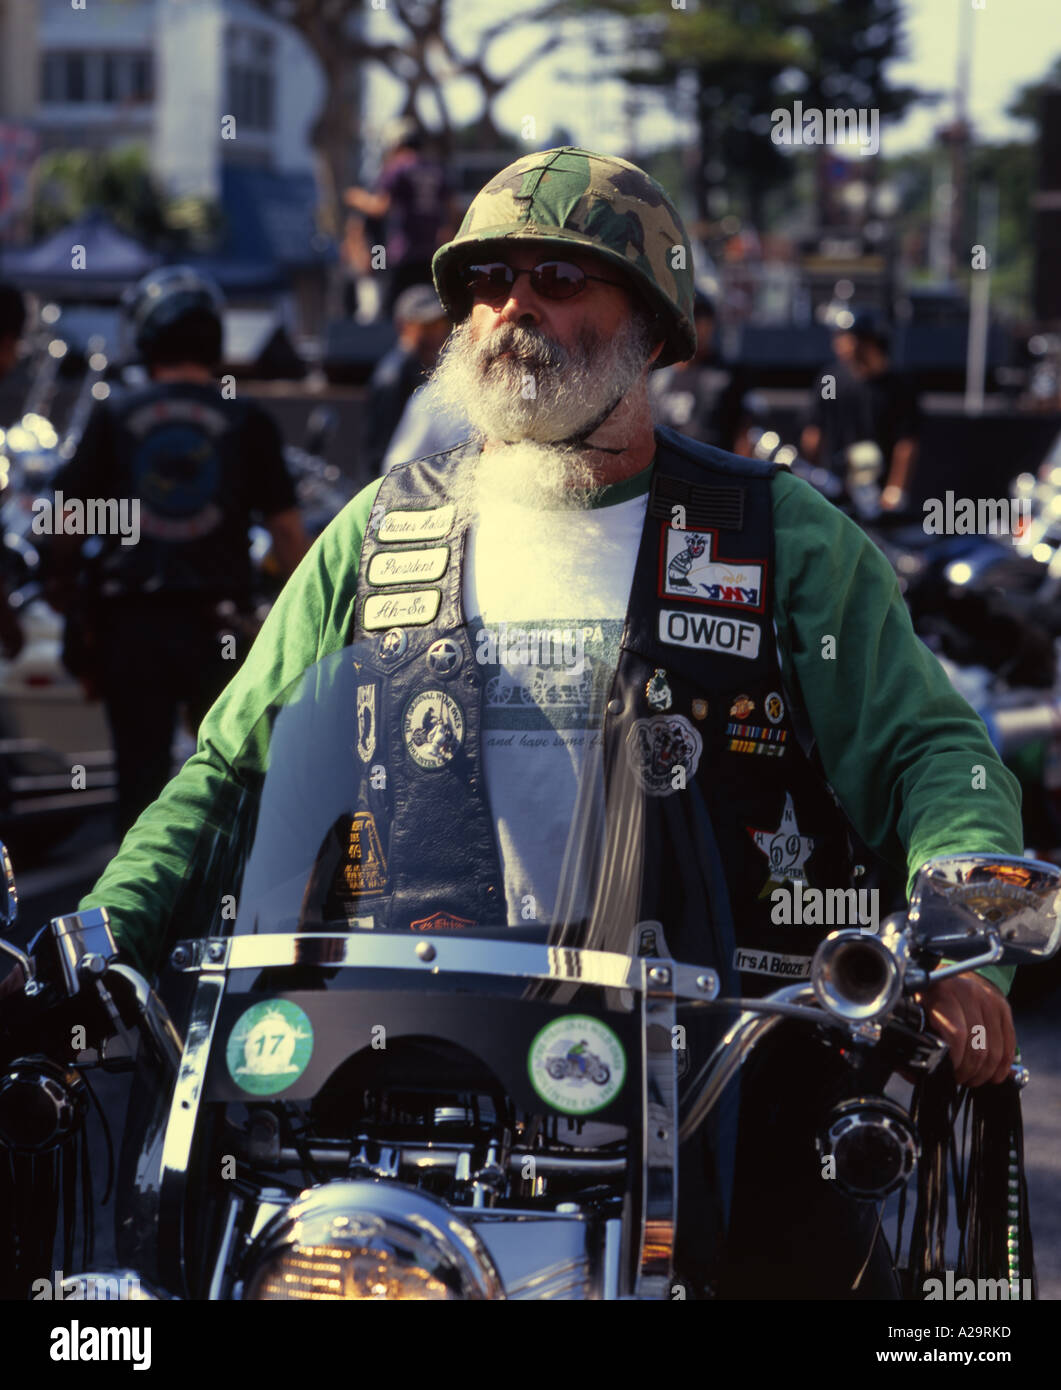 American Harley Davidson Rider at Okinawa City Gate 2 Festival Stock Photo